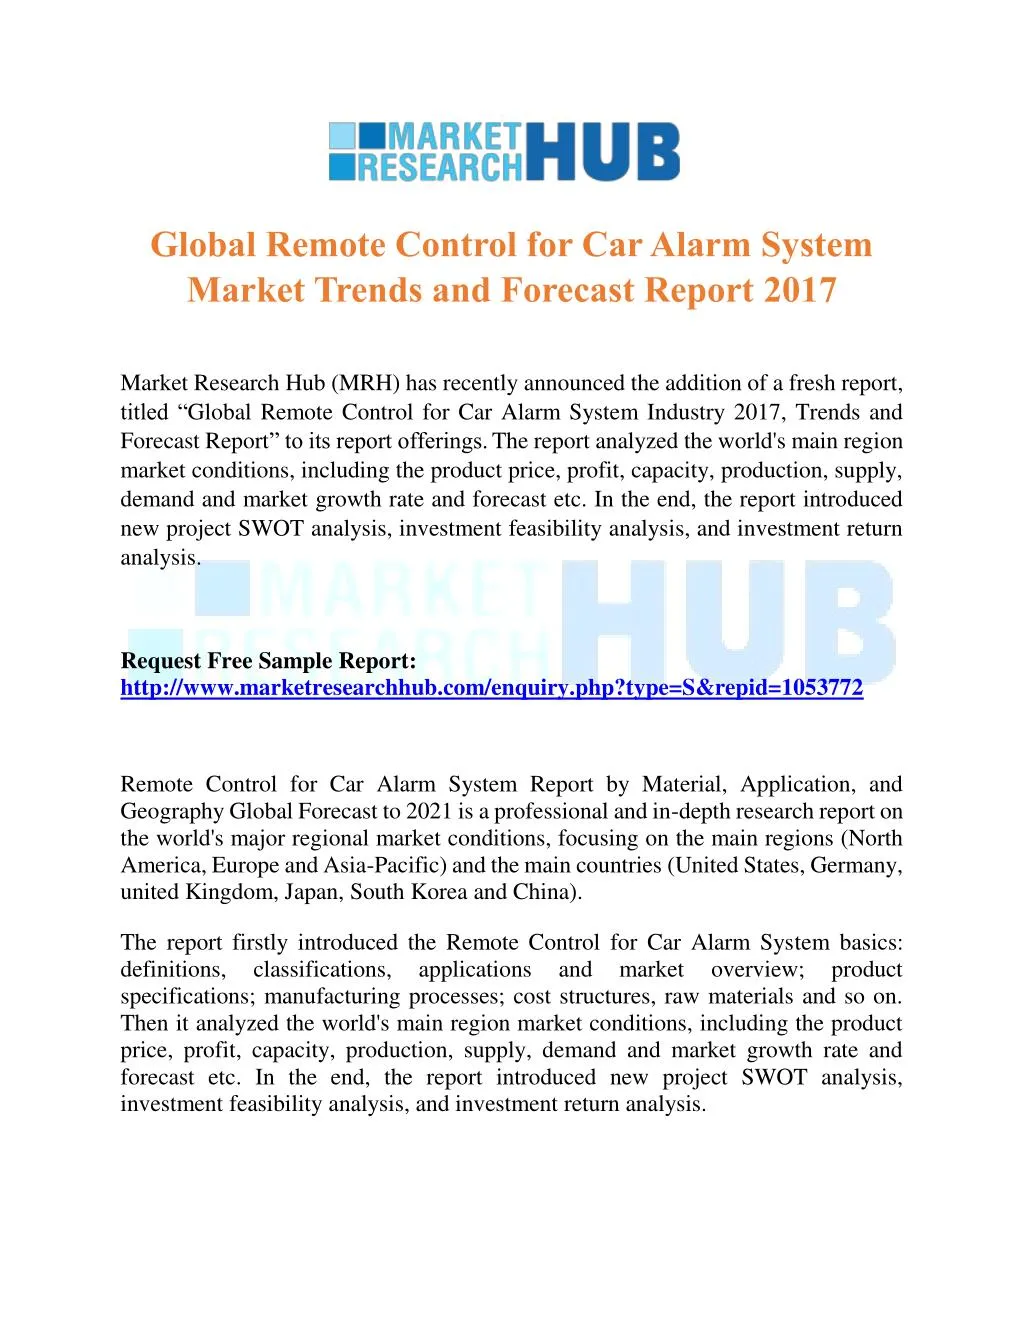 global remote control for car alarm system market